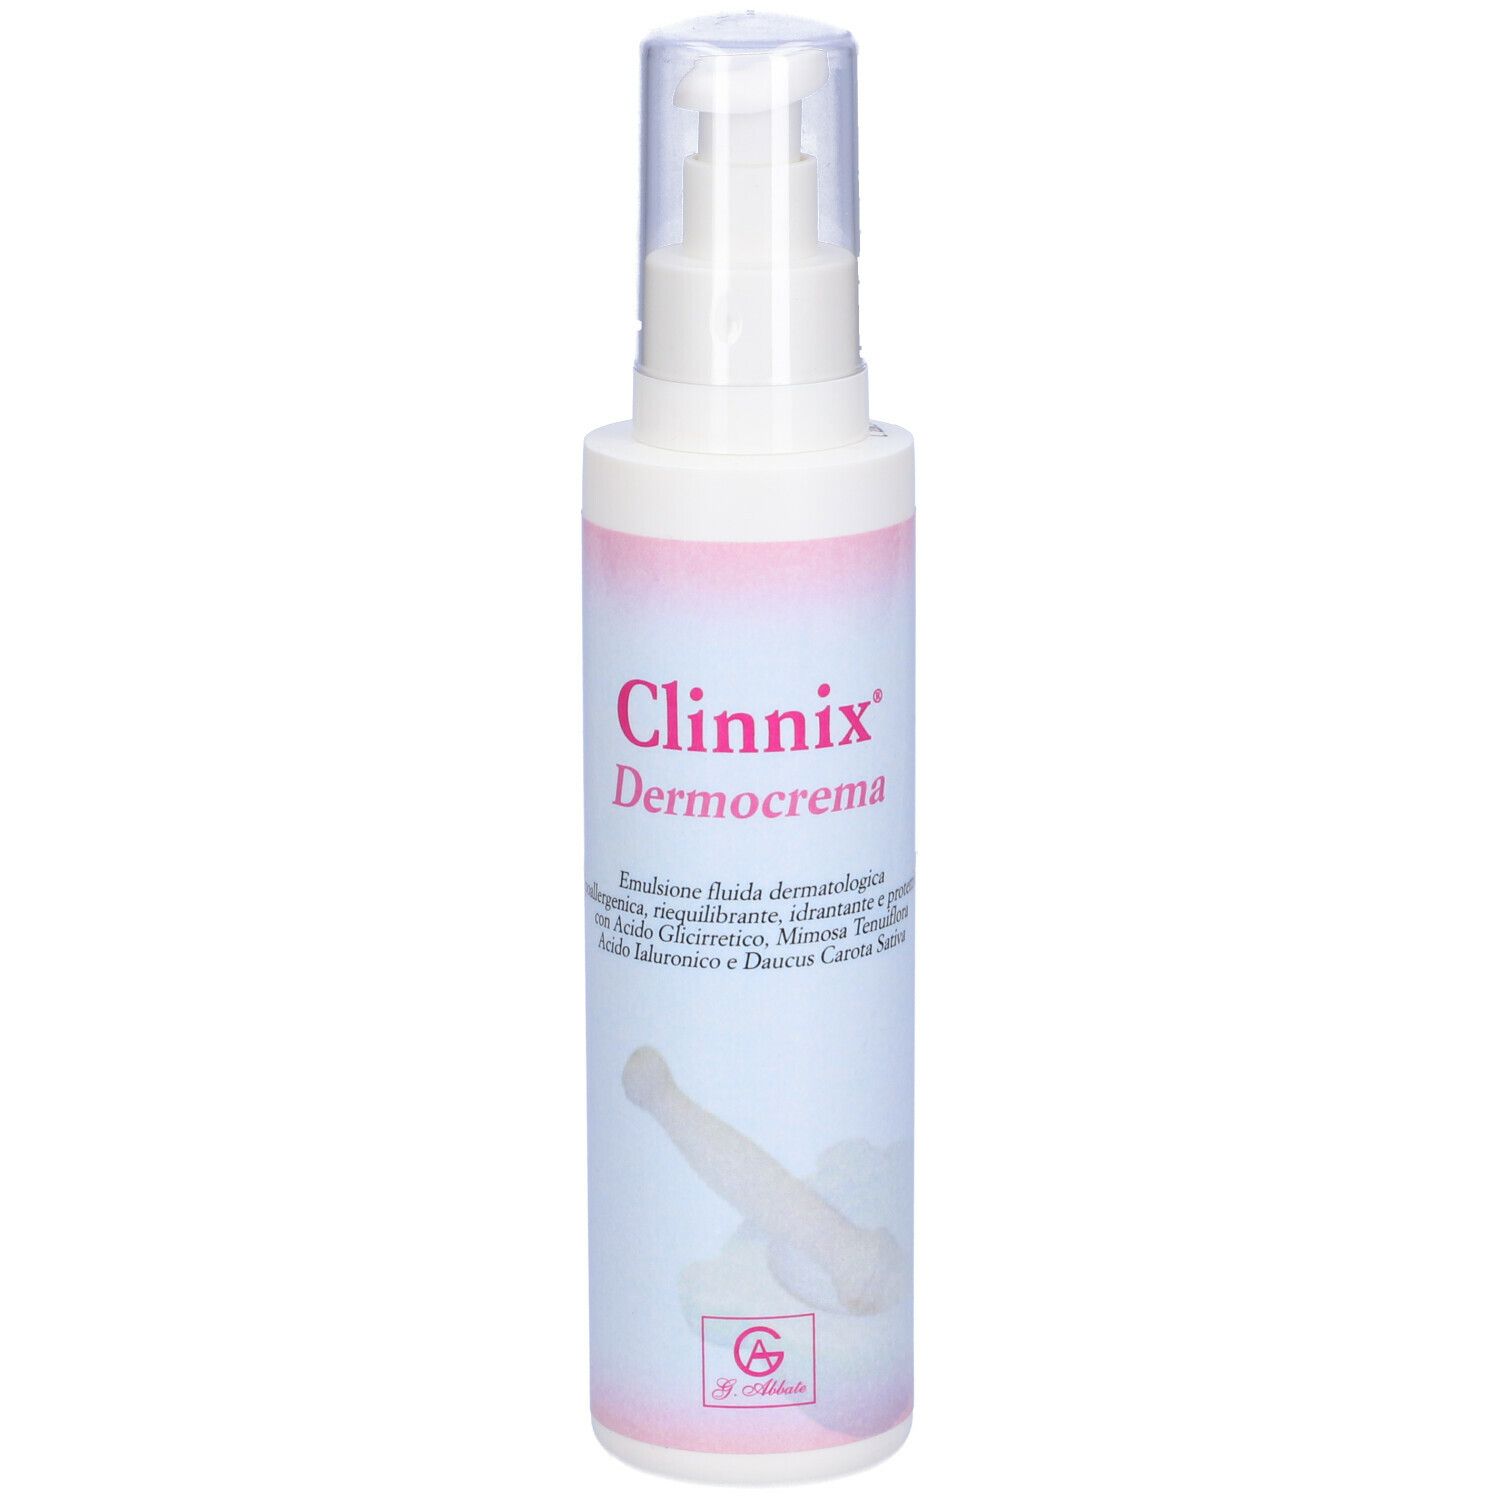 Clinnix Dermo Crema